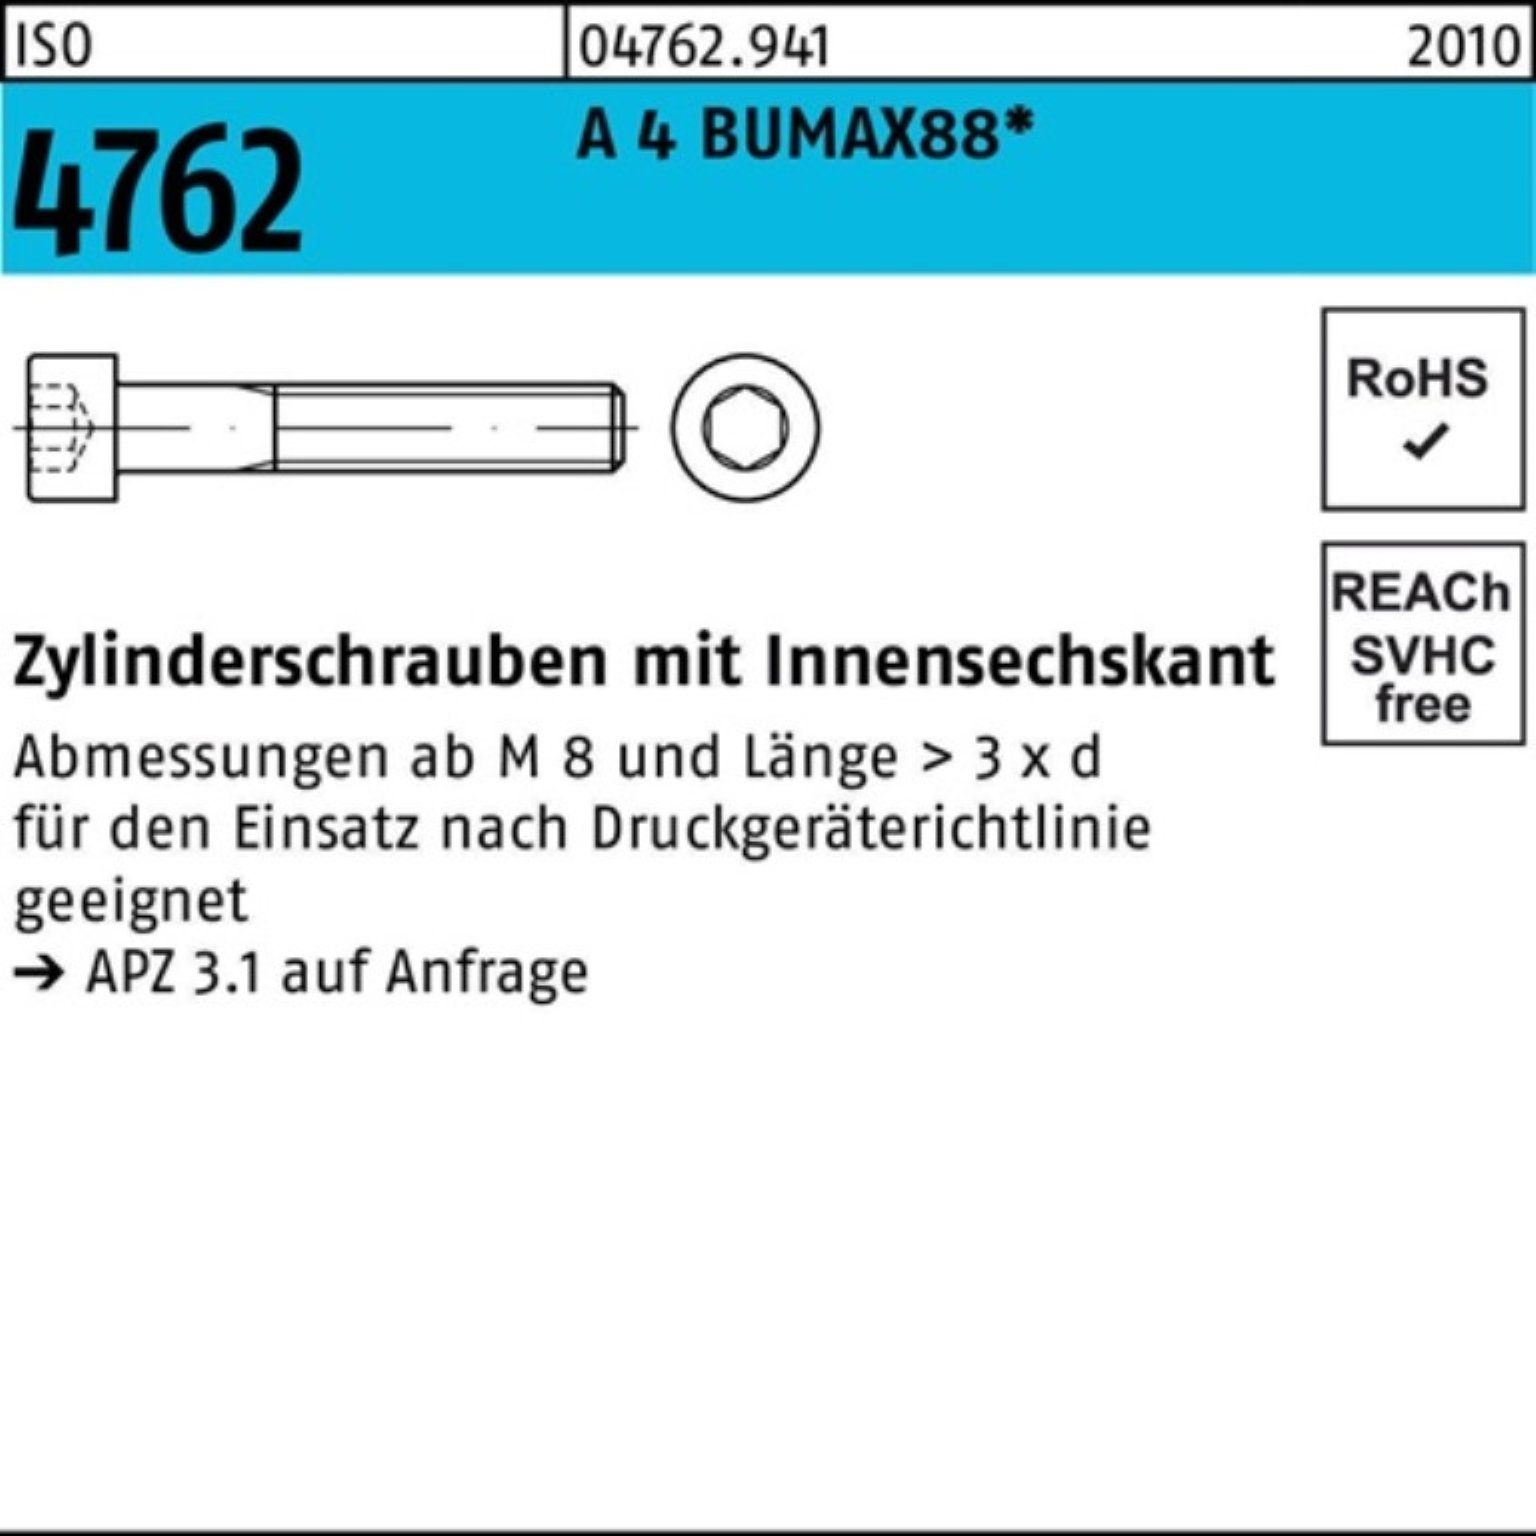 4 Pack A 50 100er BUMAX88 35 Zylinderschraube 4762 Bufab ISO M8x Zylinderschraube S Innen-6kt